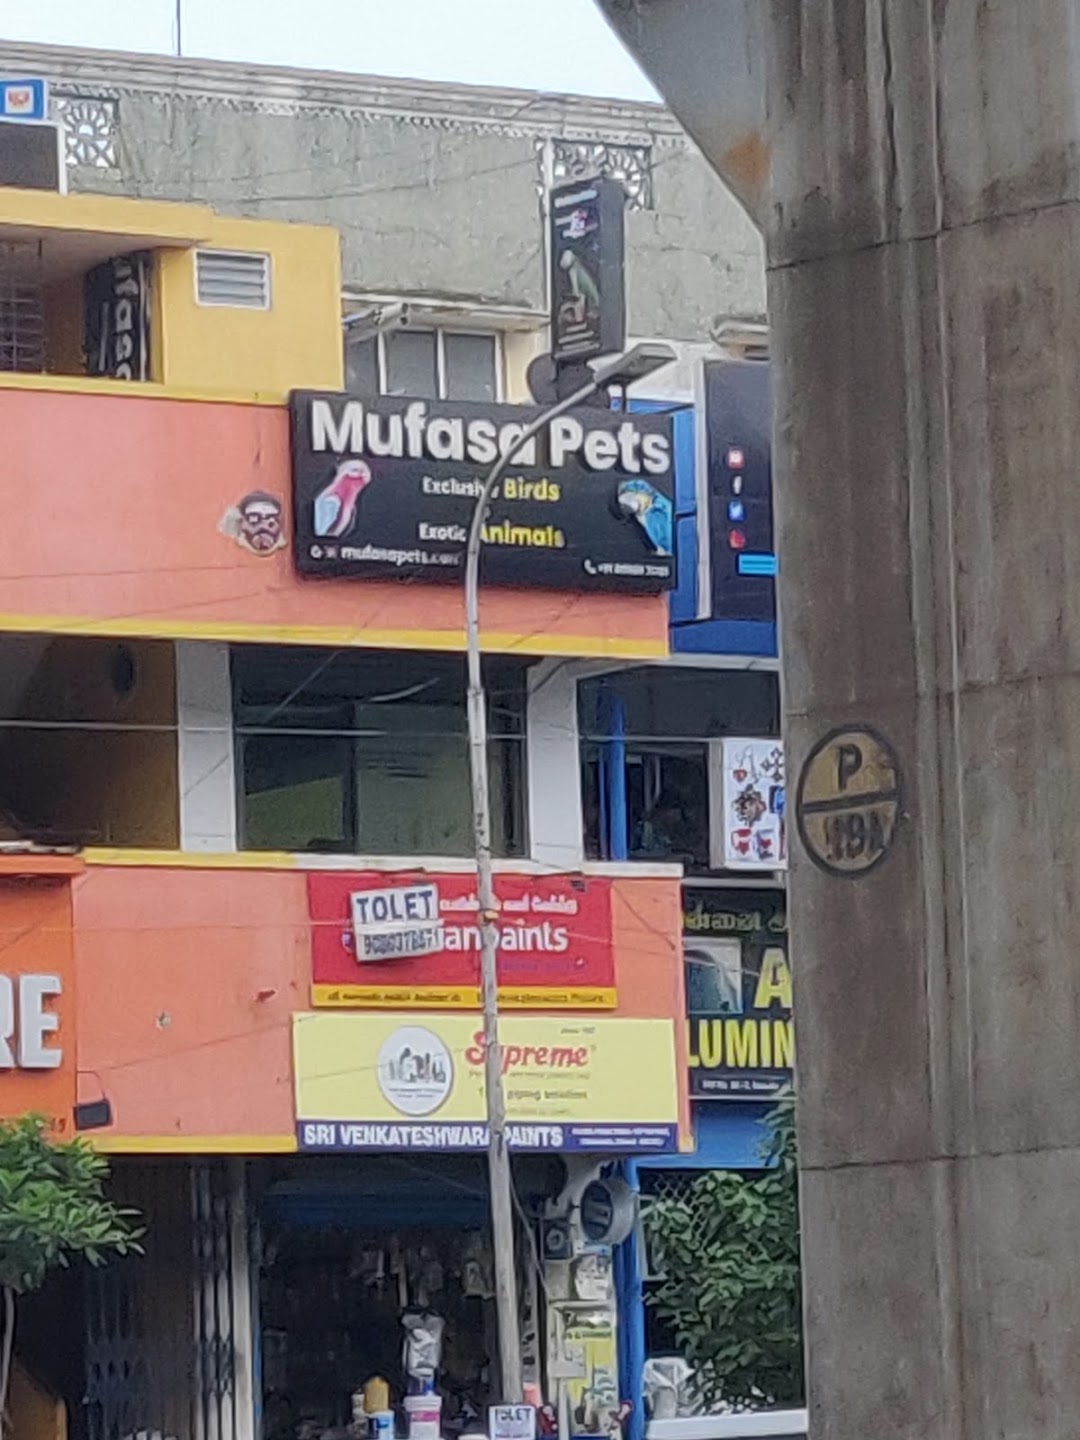 Mufasa Pets - Exclusive Birds Shop In Chennai